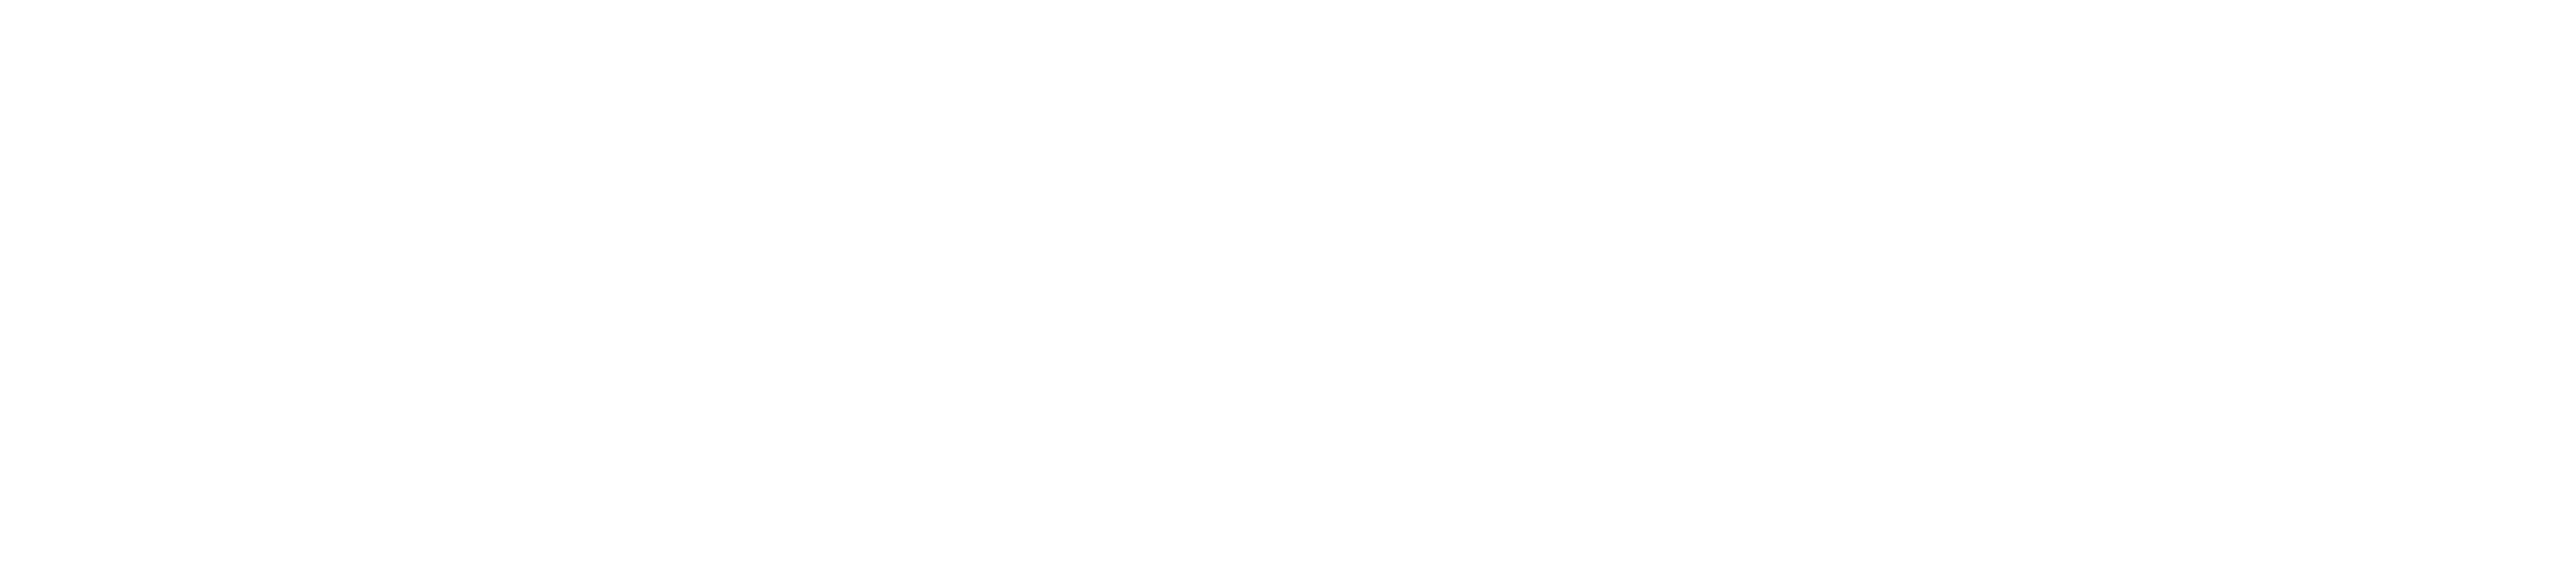 Founders Alliance Logo White